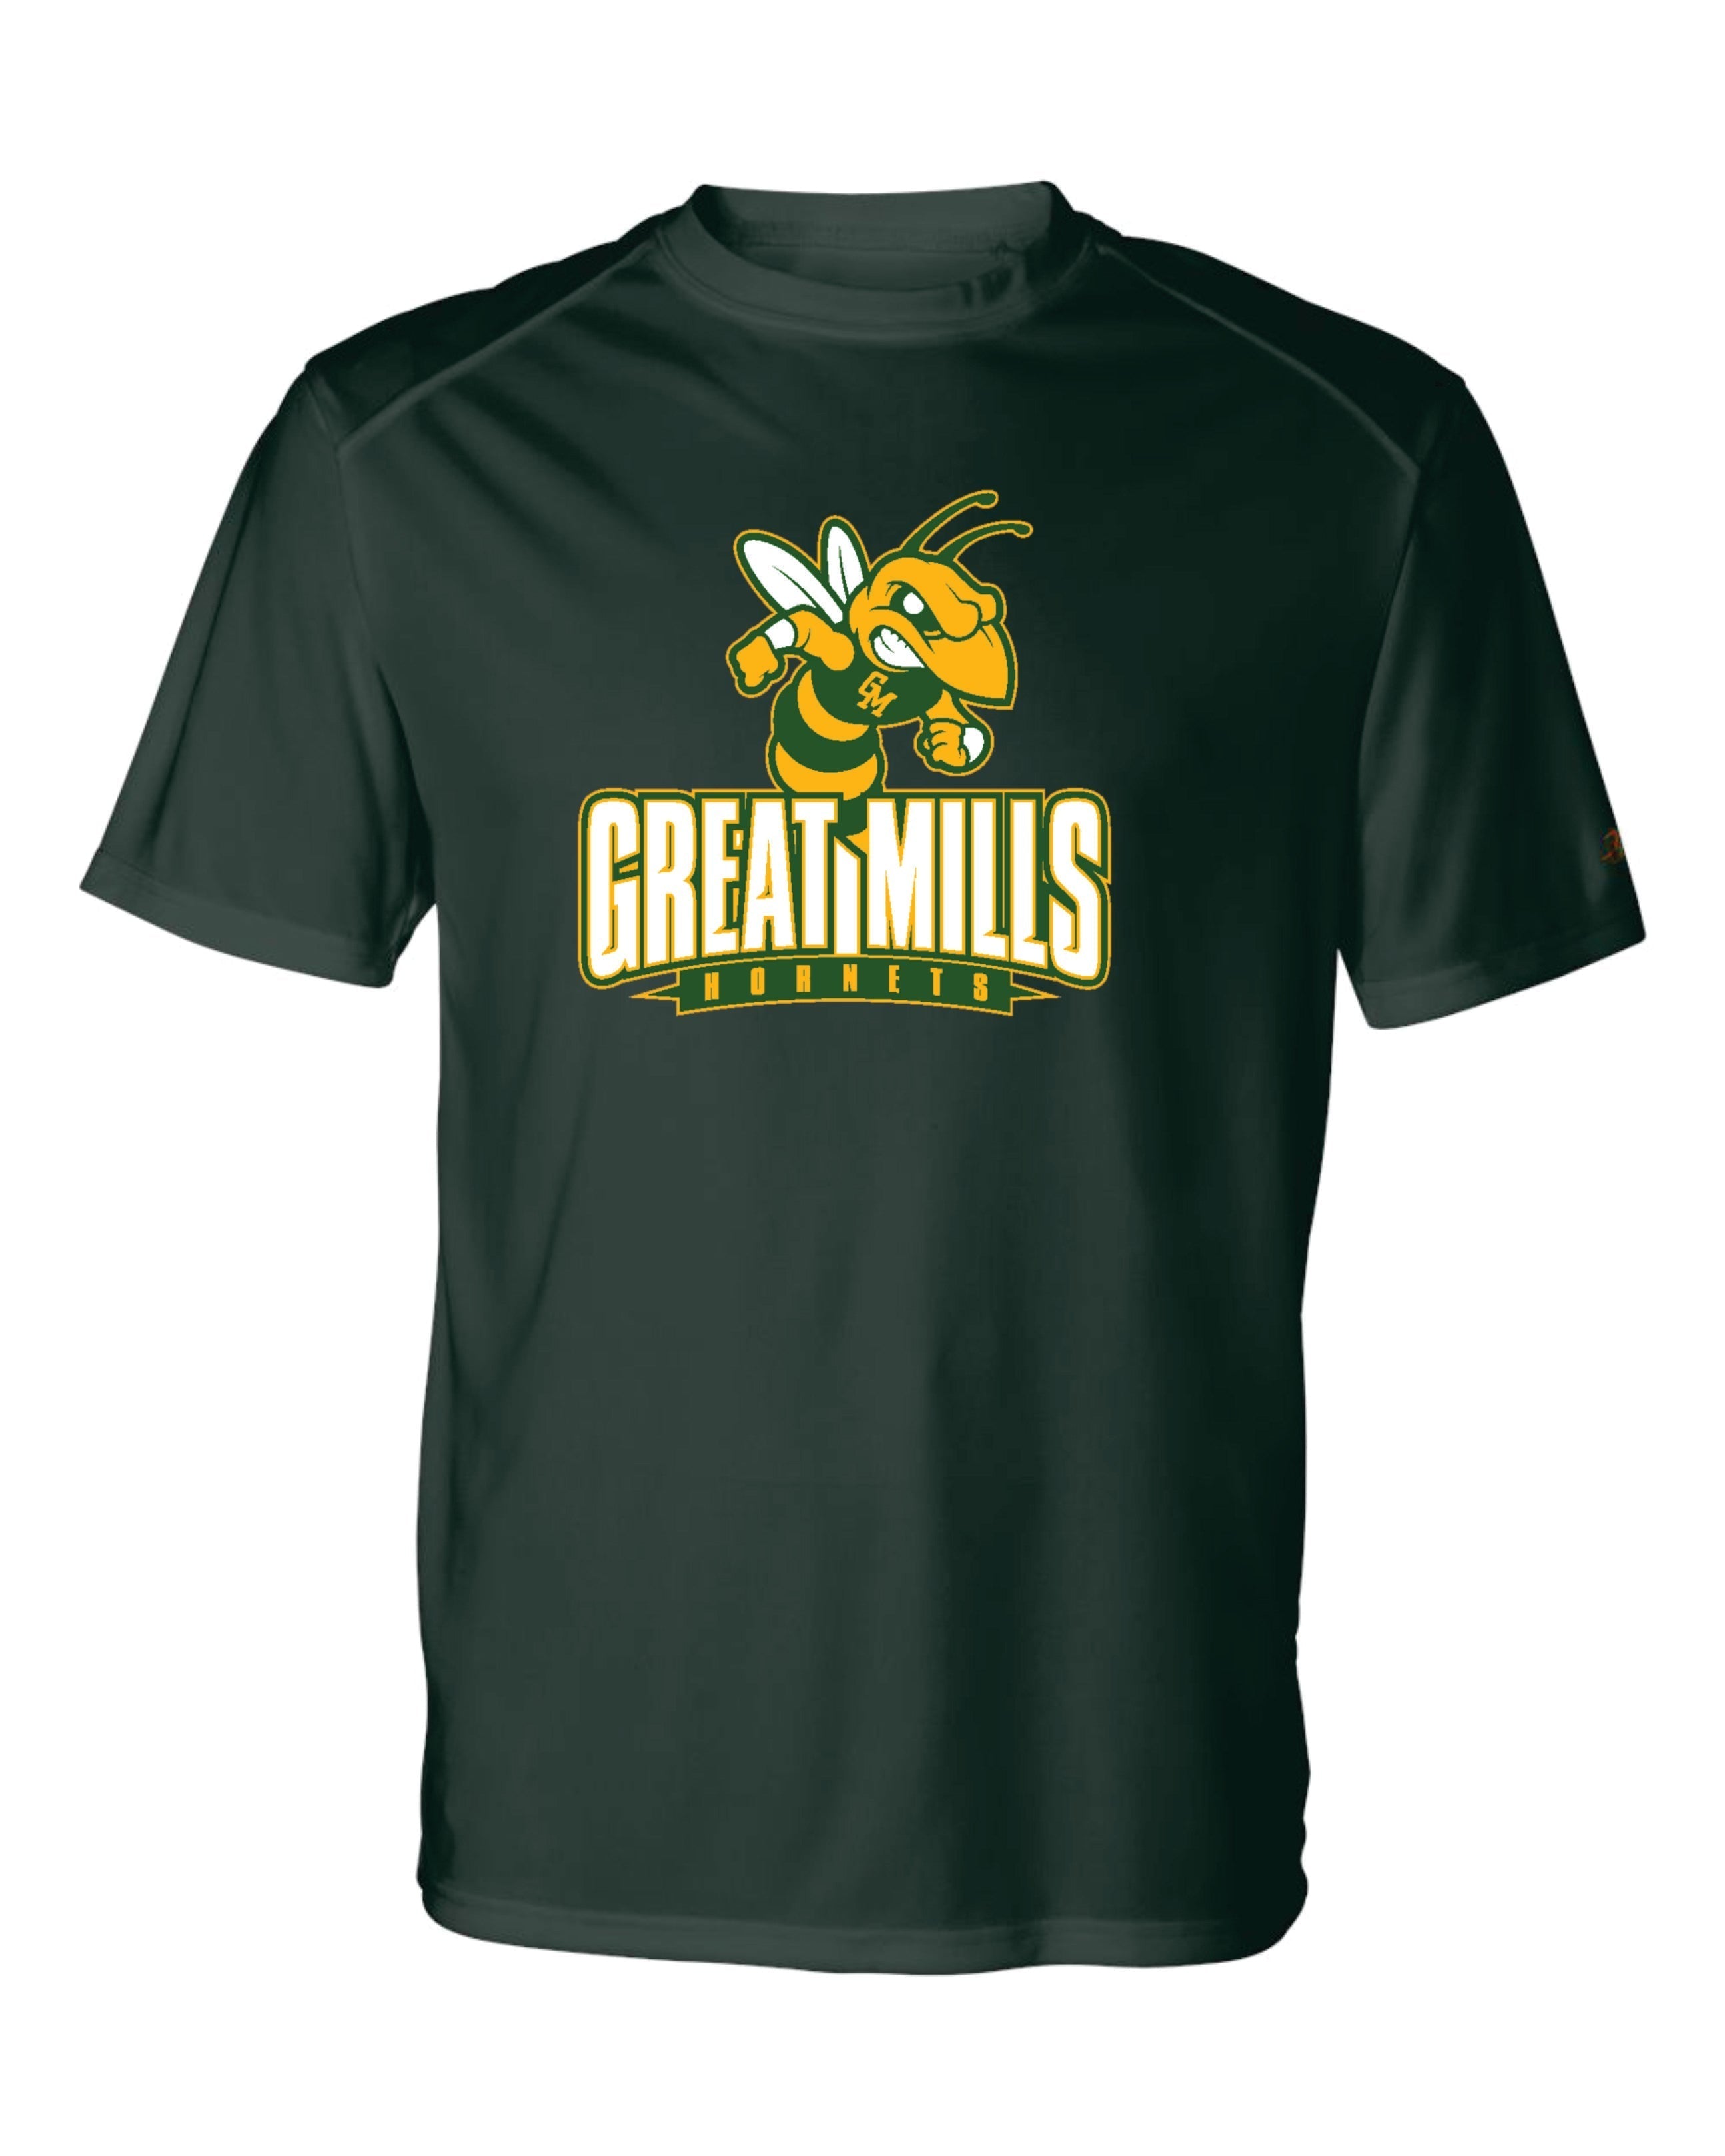 Great Mills Field Hockey Short Sleeve Badger Dri Fit T shirt YOUTH